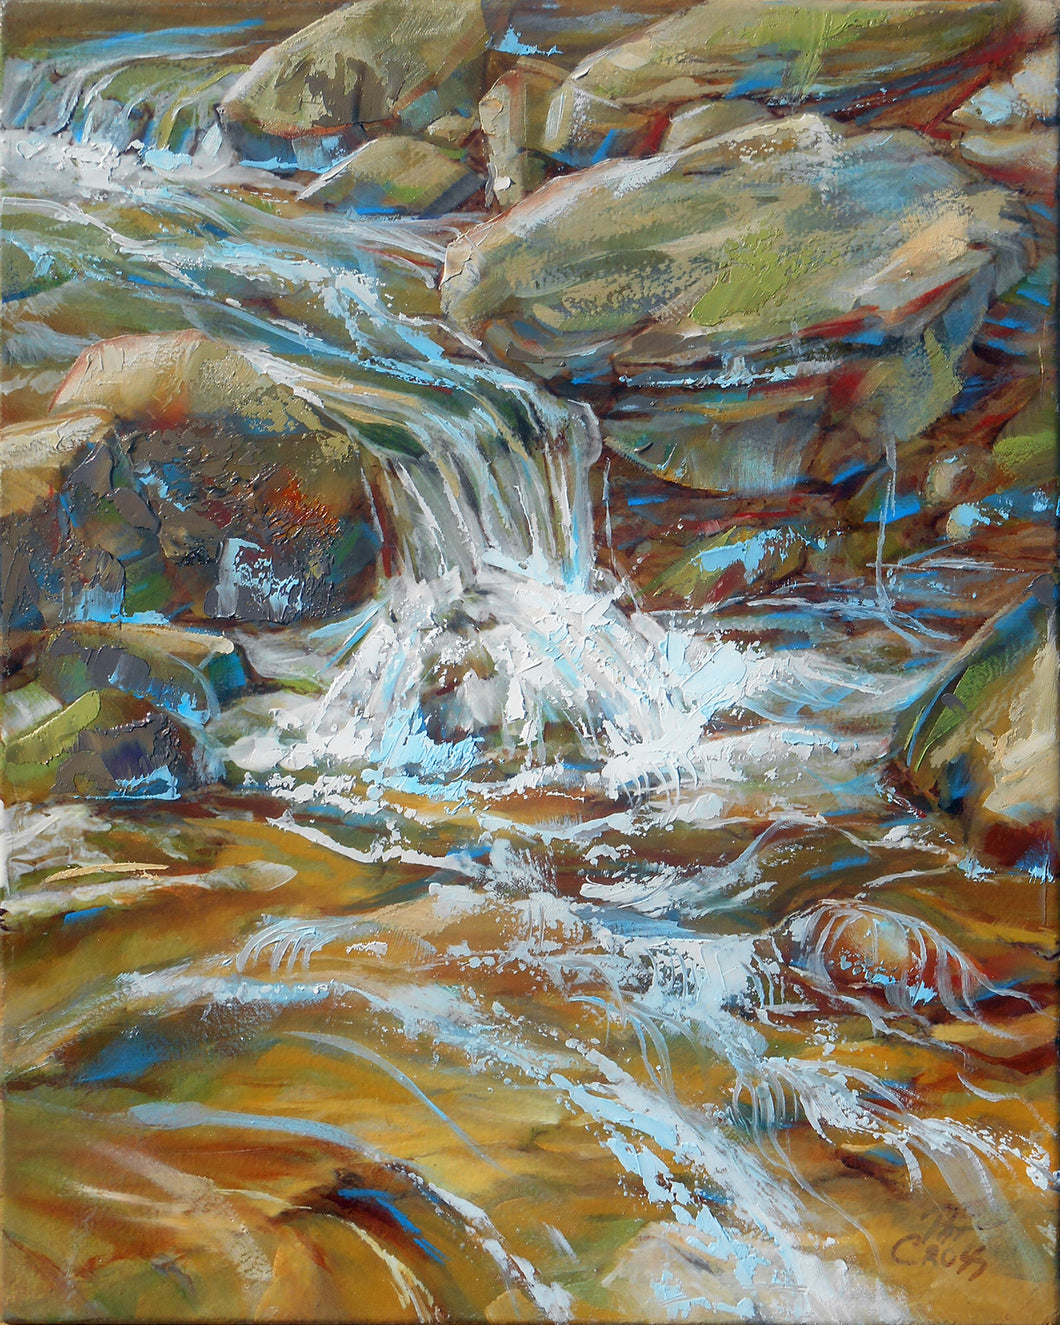 Making a Splash original oil painting by Pat Cross.